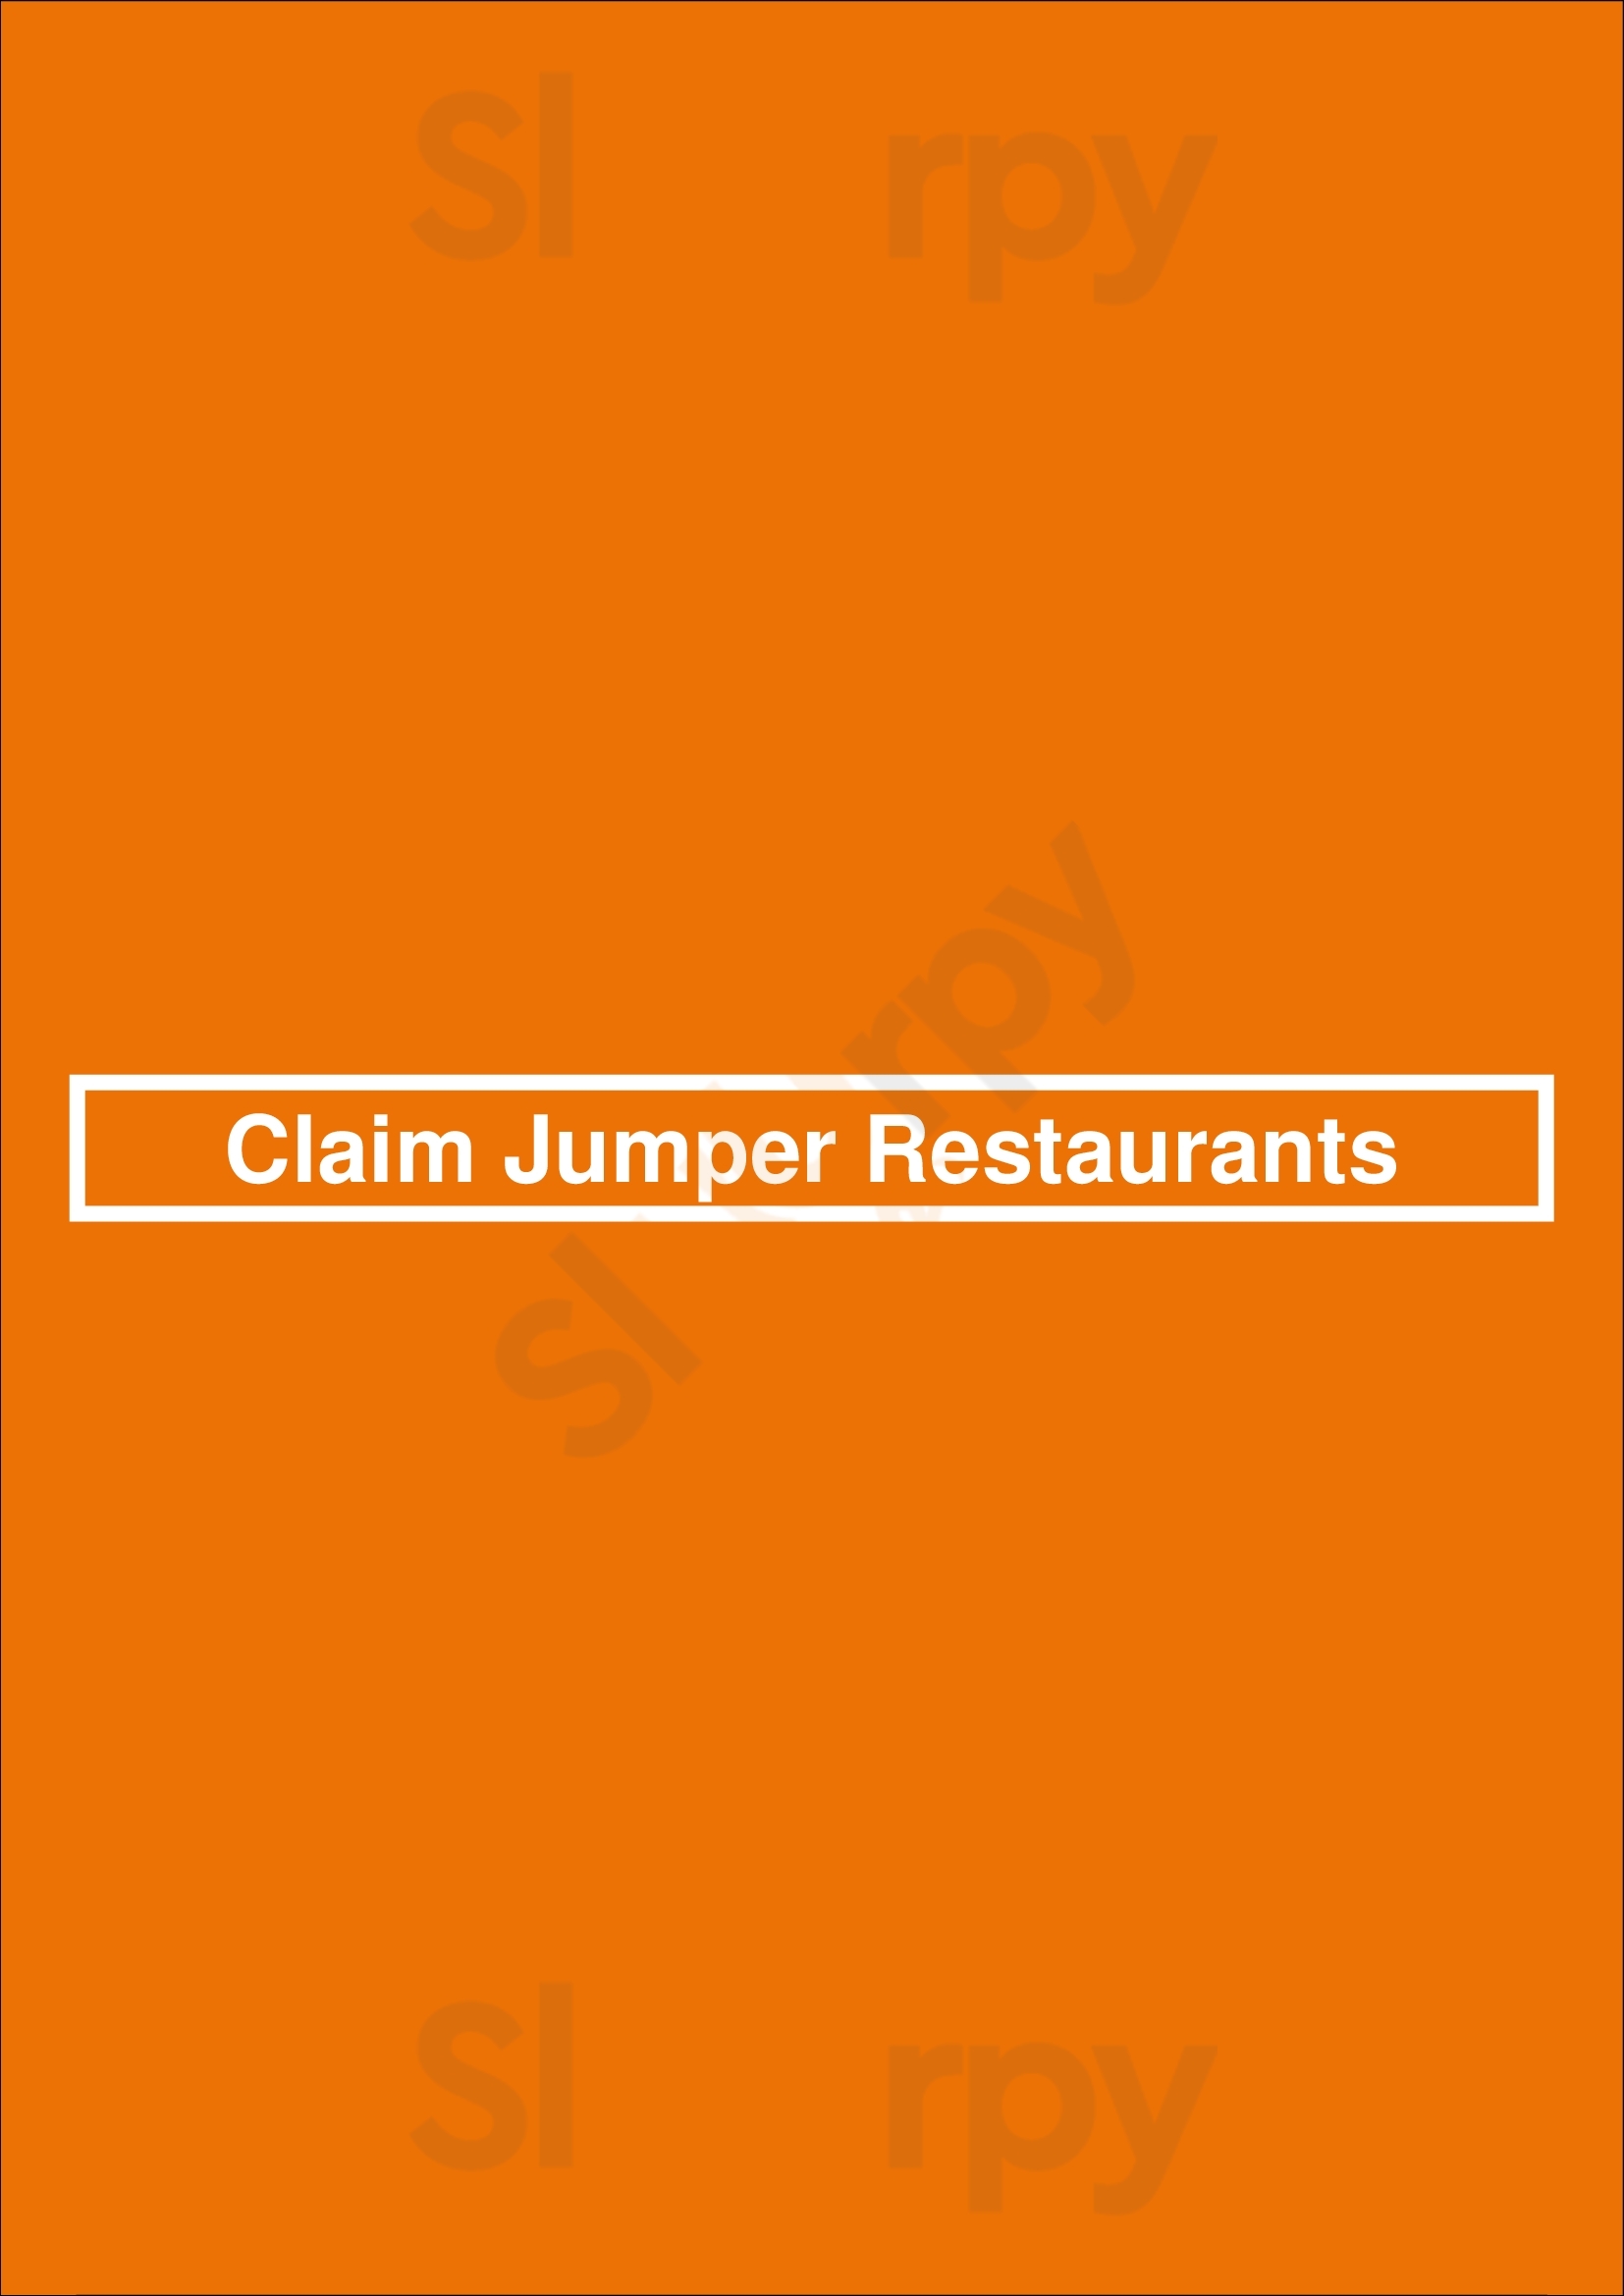 Claim Jumper Restaurants Tucson Menu - 1